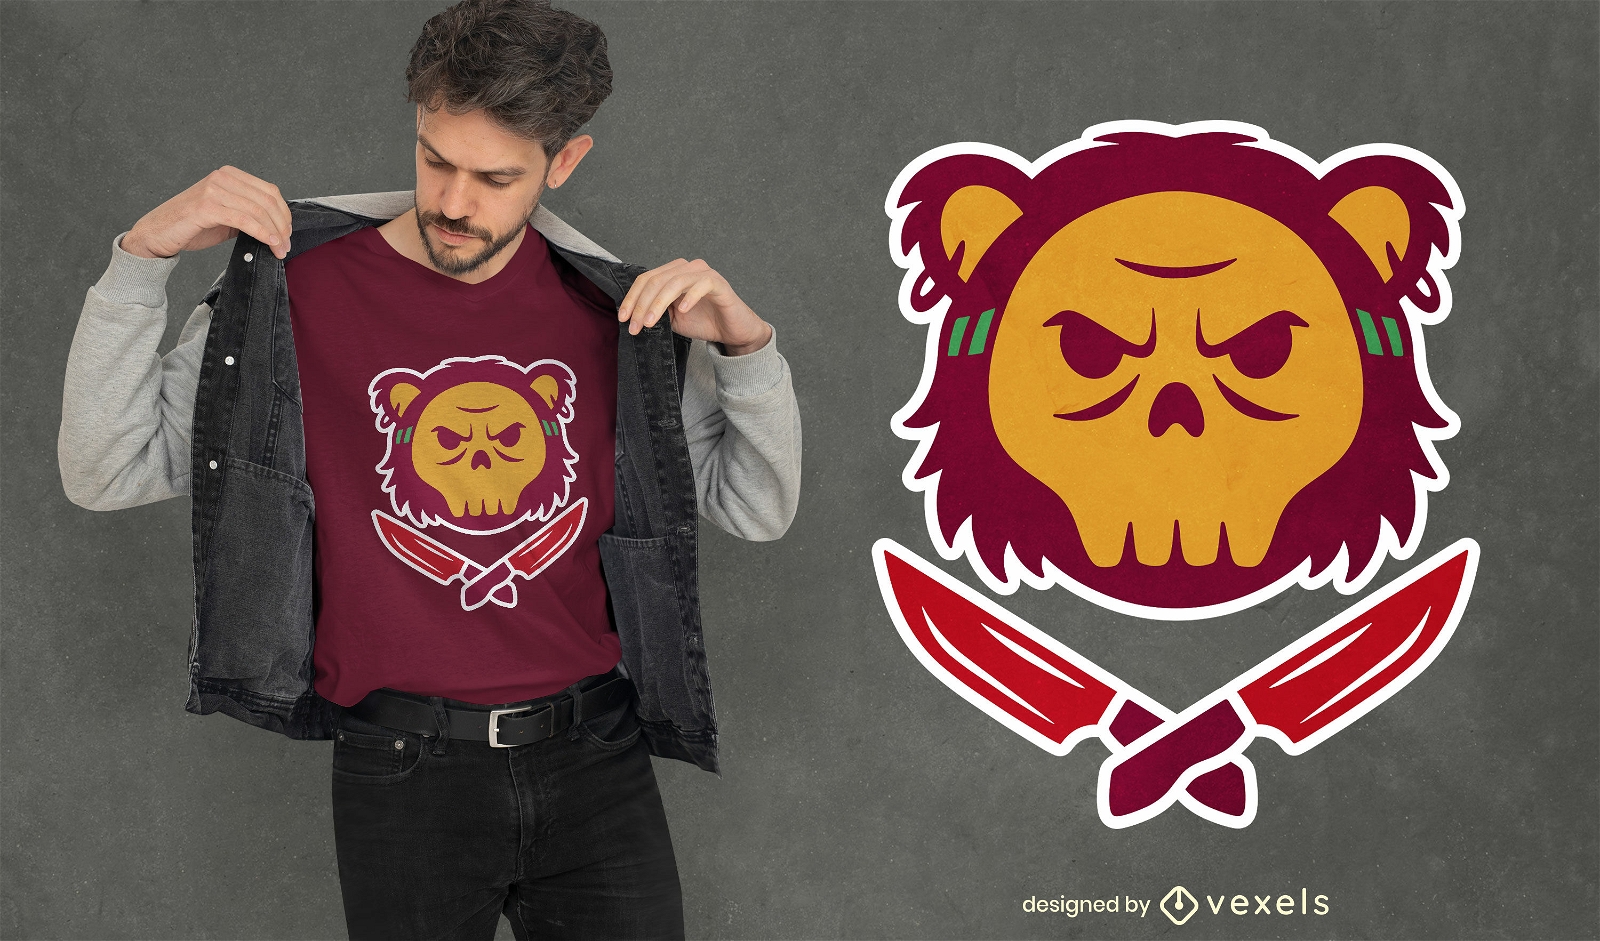 Killer bear t-shirt design